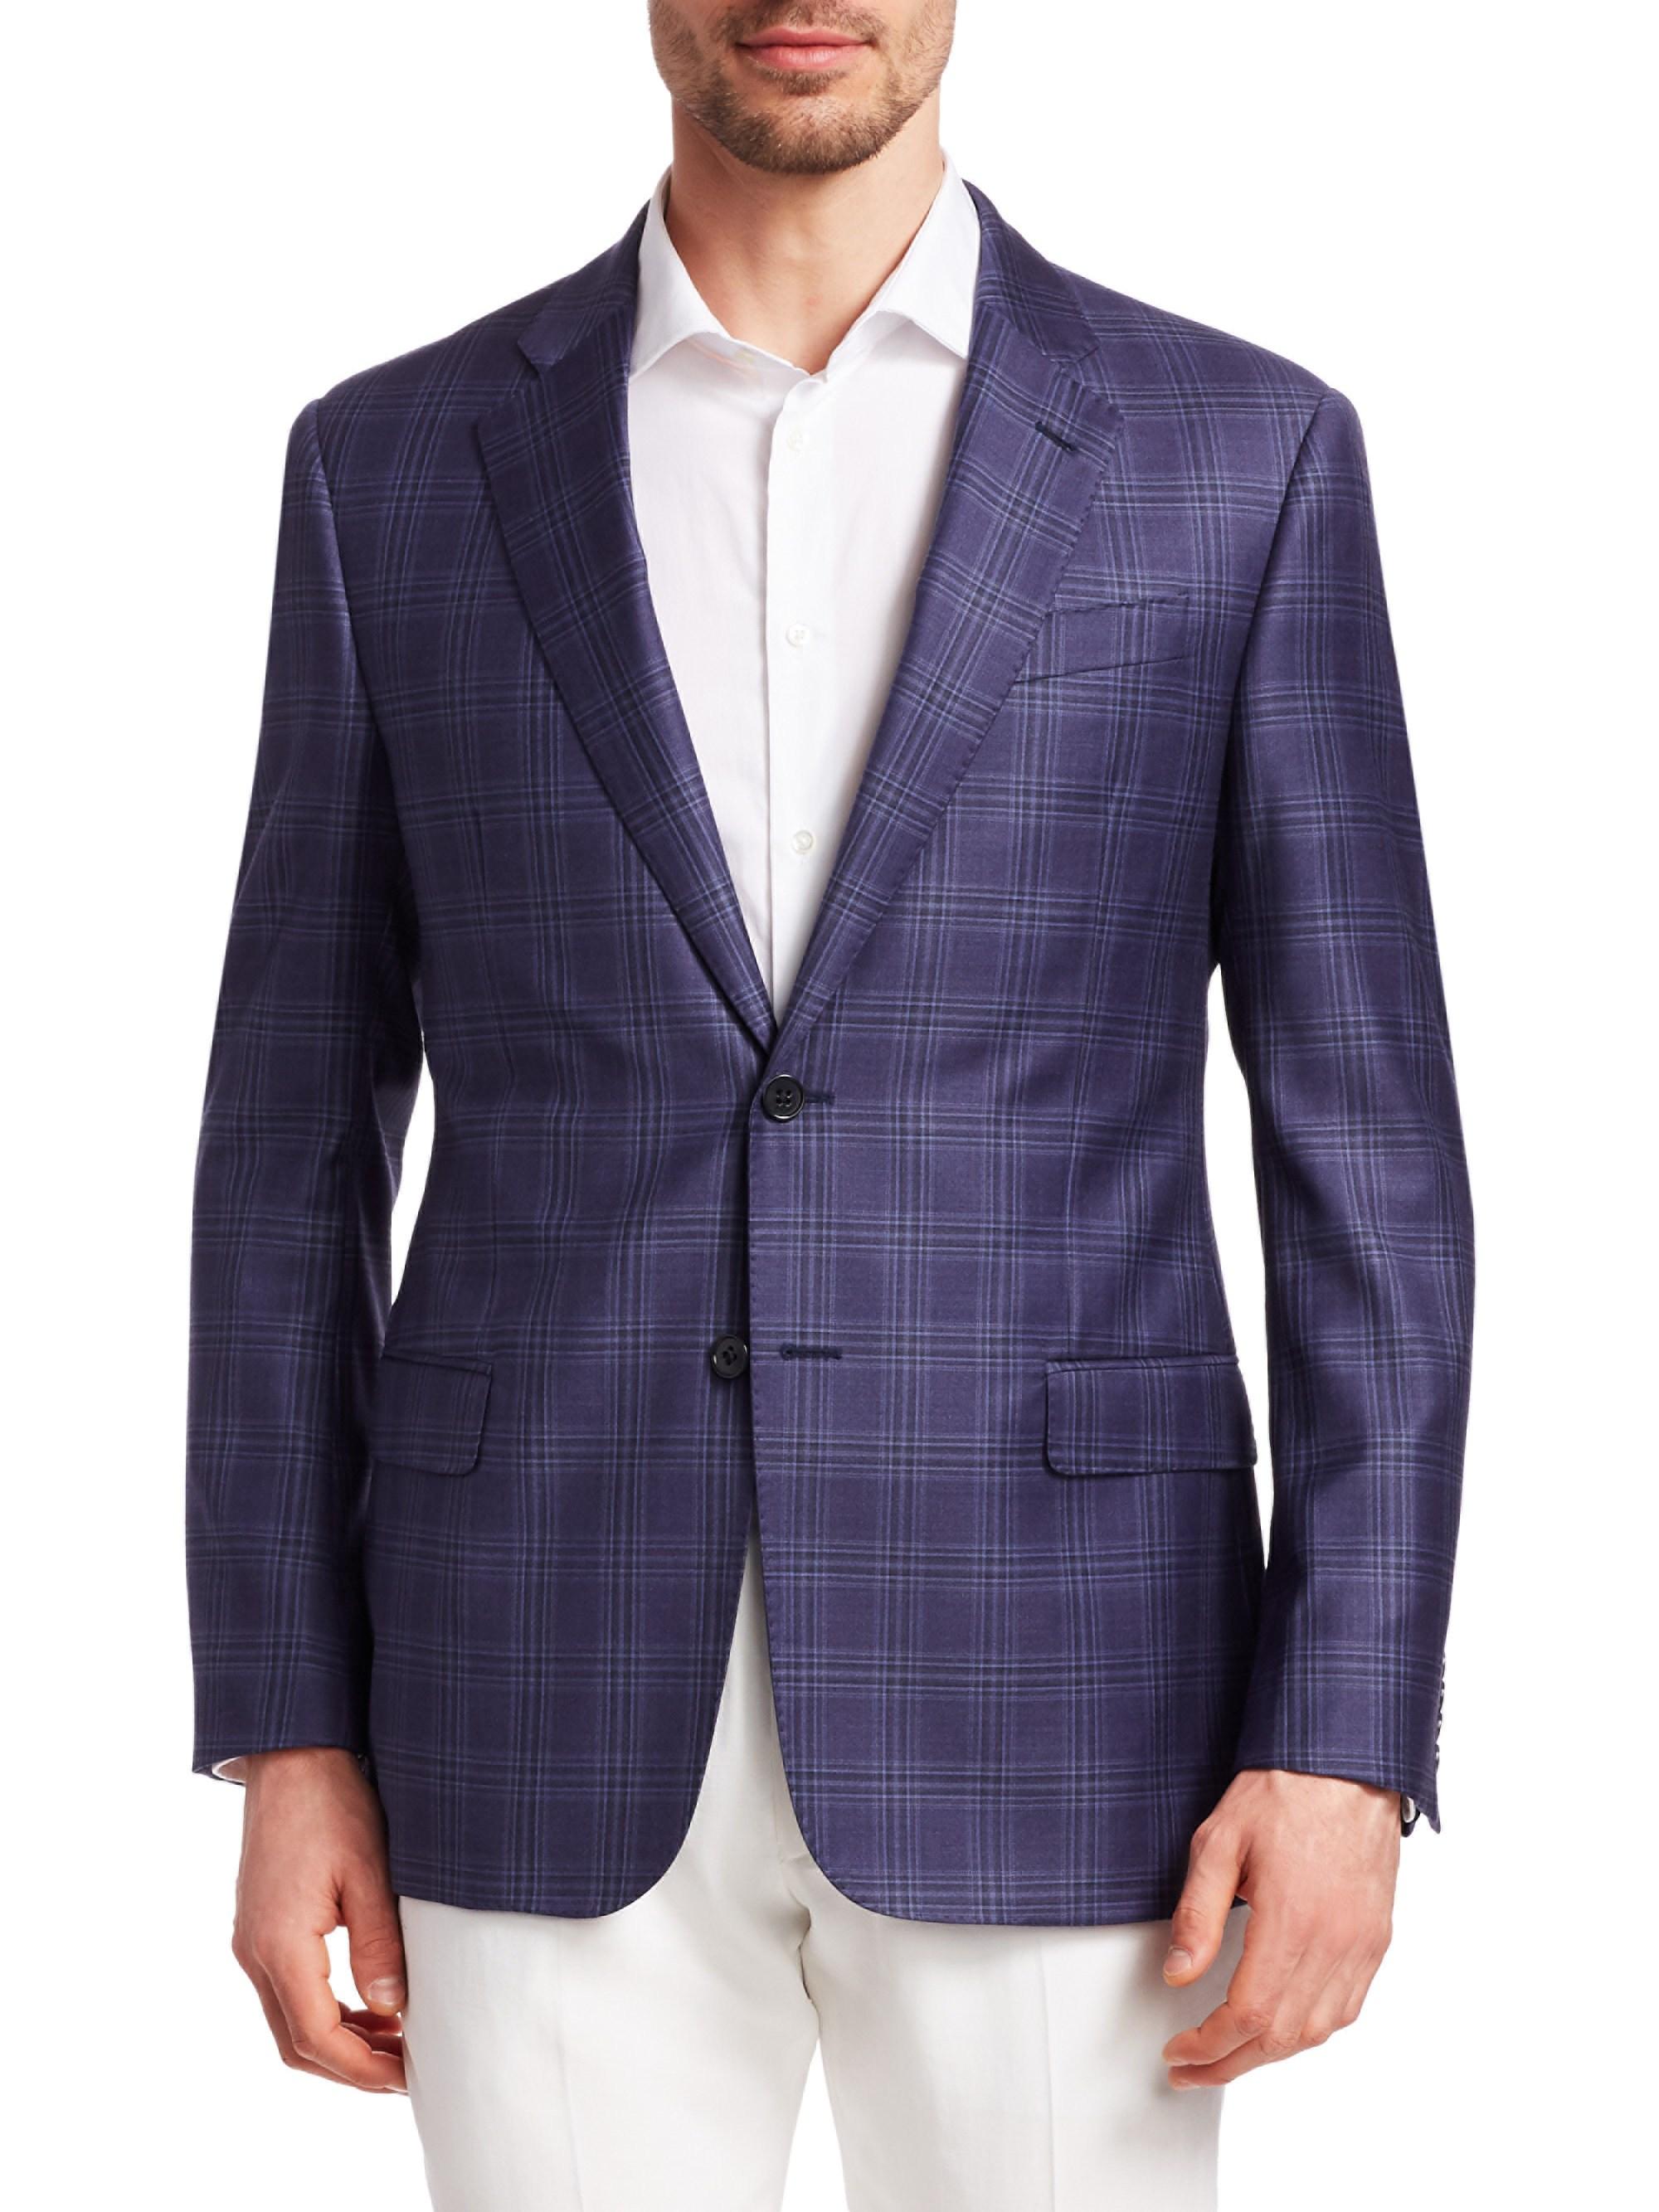 Emporio Armani Plaid G Line Wool Sport Coat in Purple for Men - Lyst